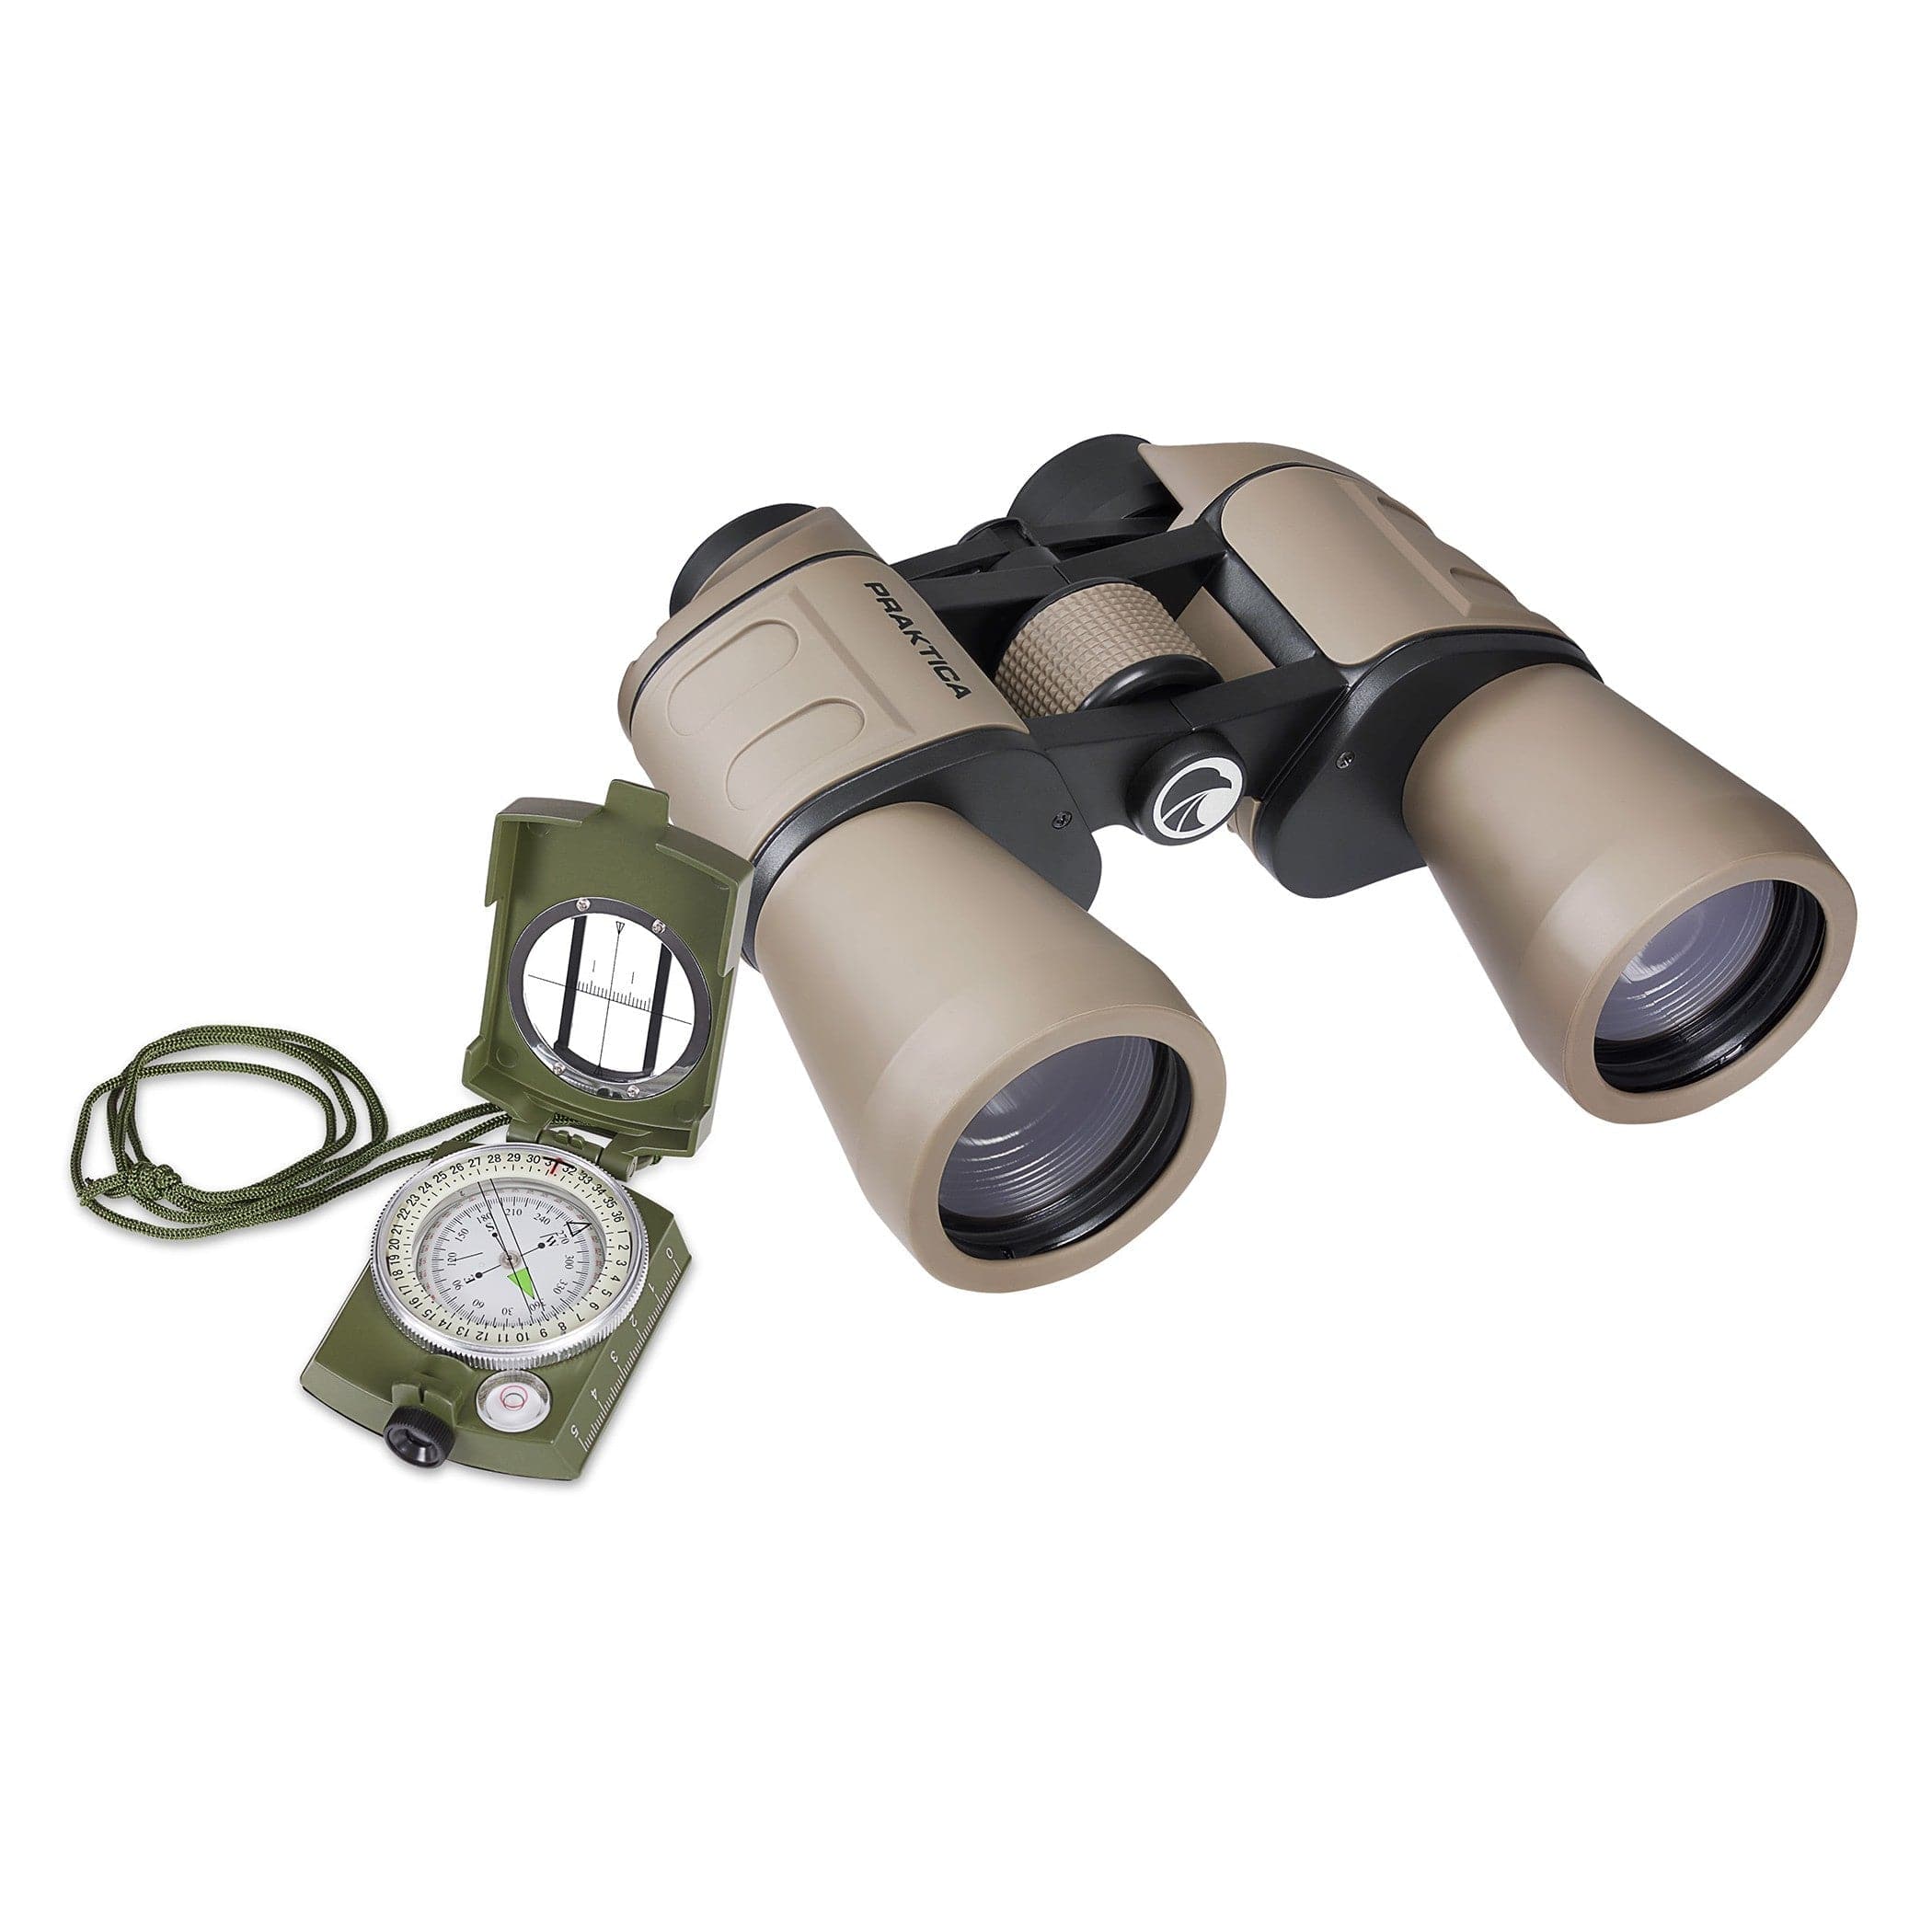 PRAKTICA Falcon 12x50mm Porro Prism Field Binoculars - Sand (Binoculars + Compass)